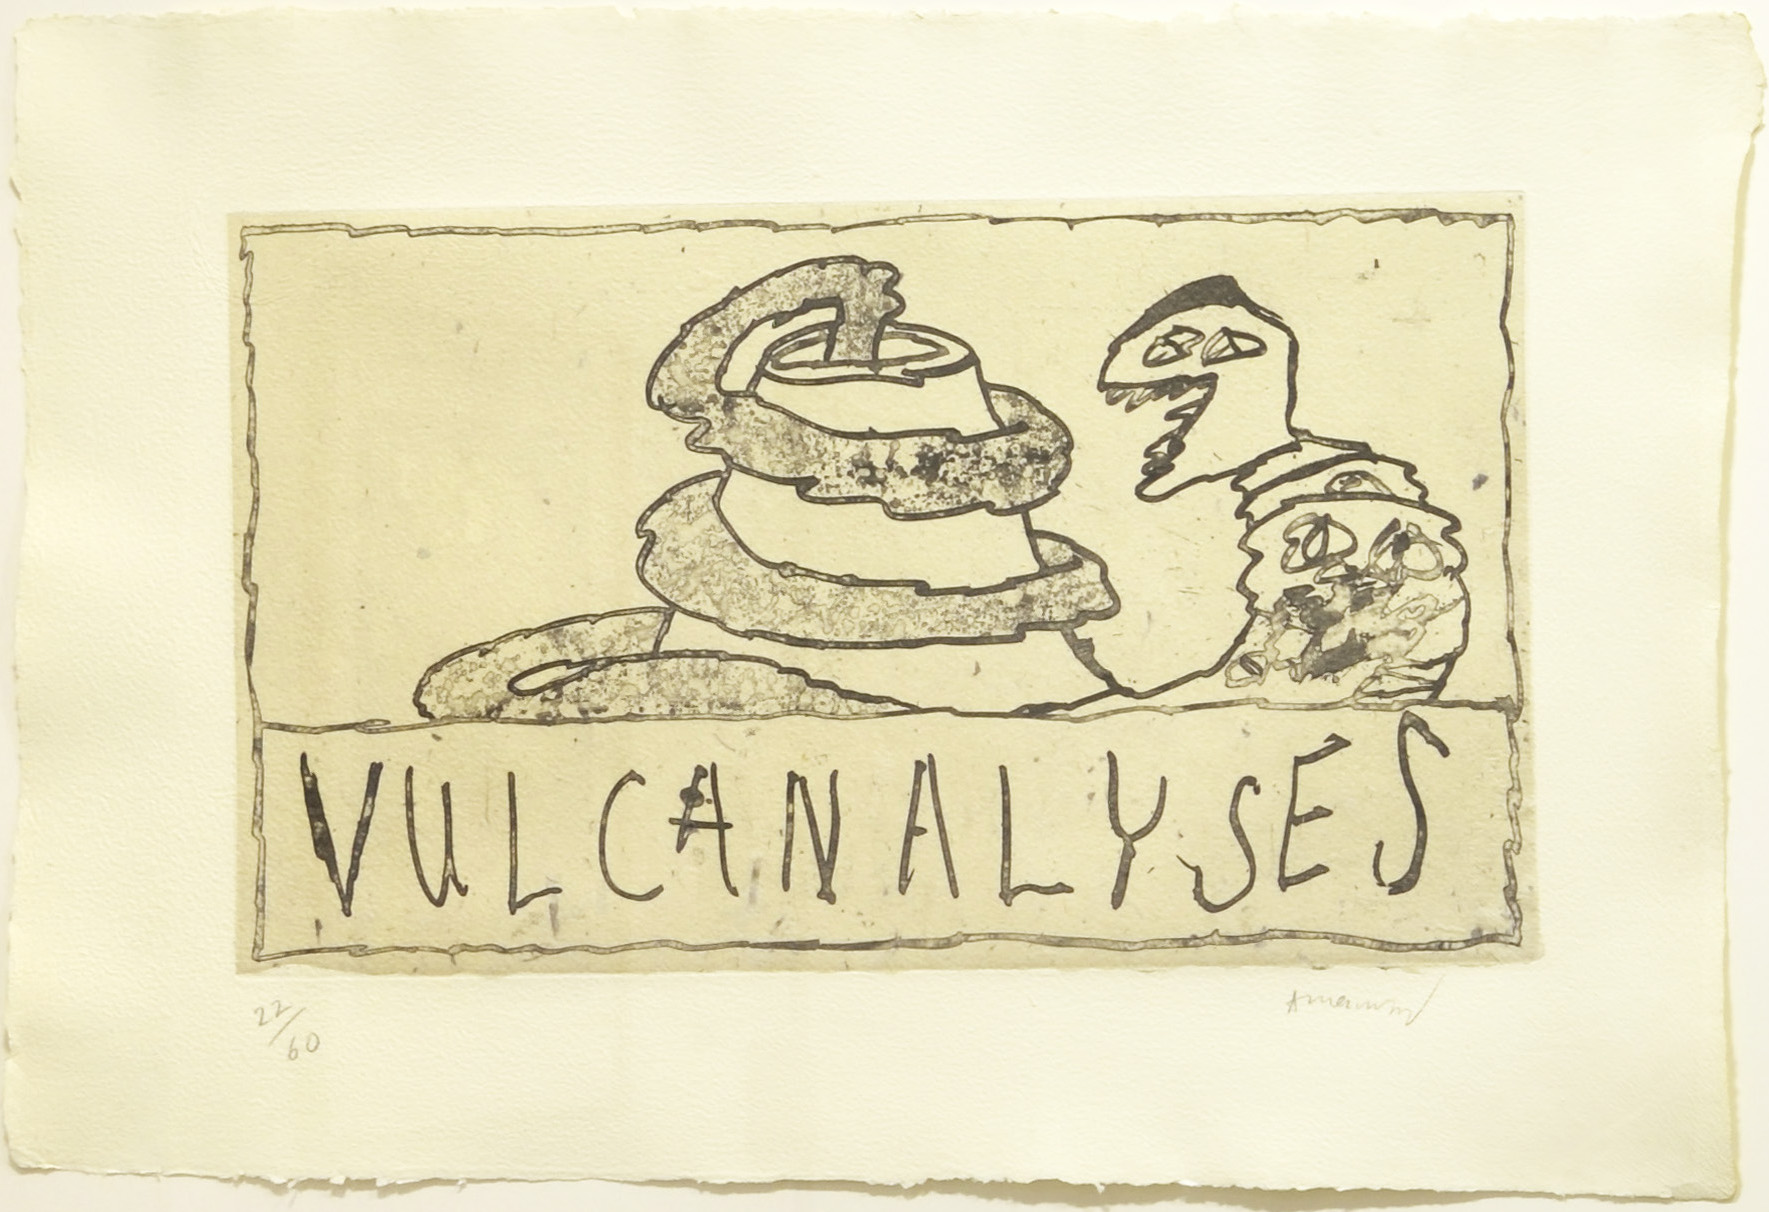 Vulcanalyses, 1971